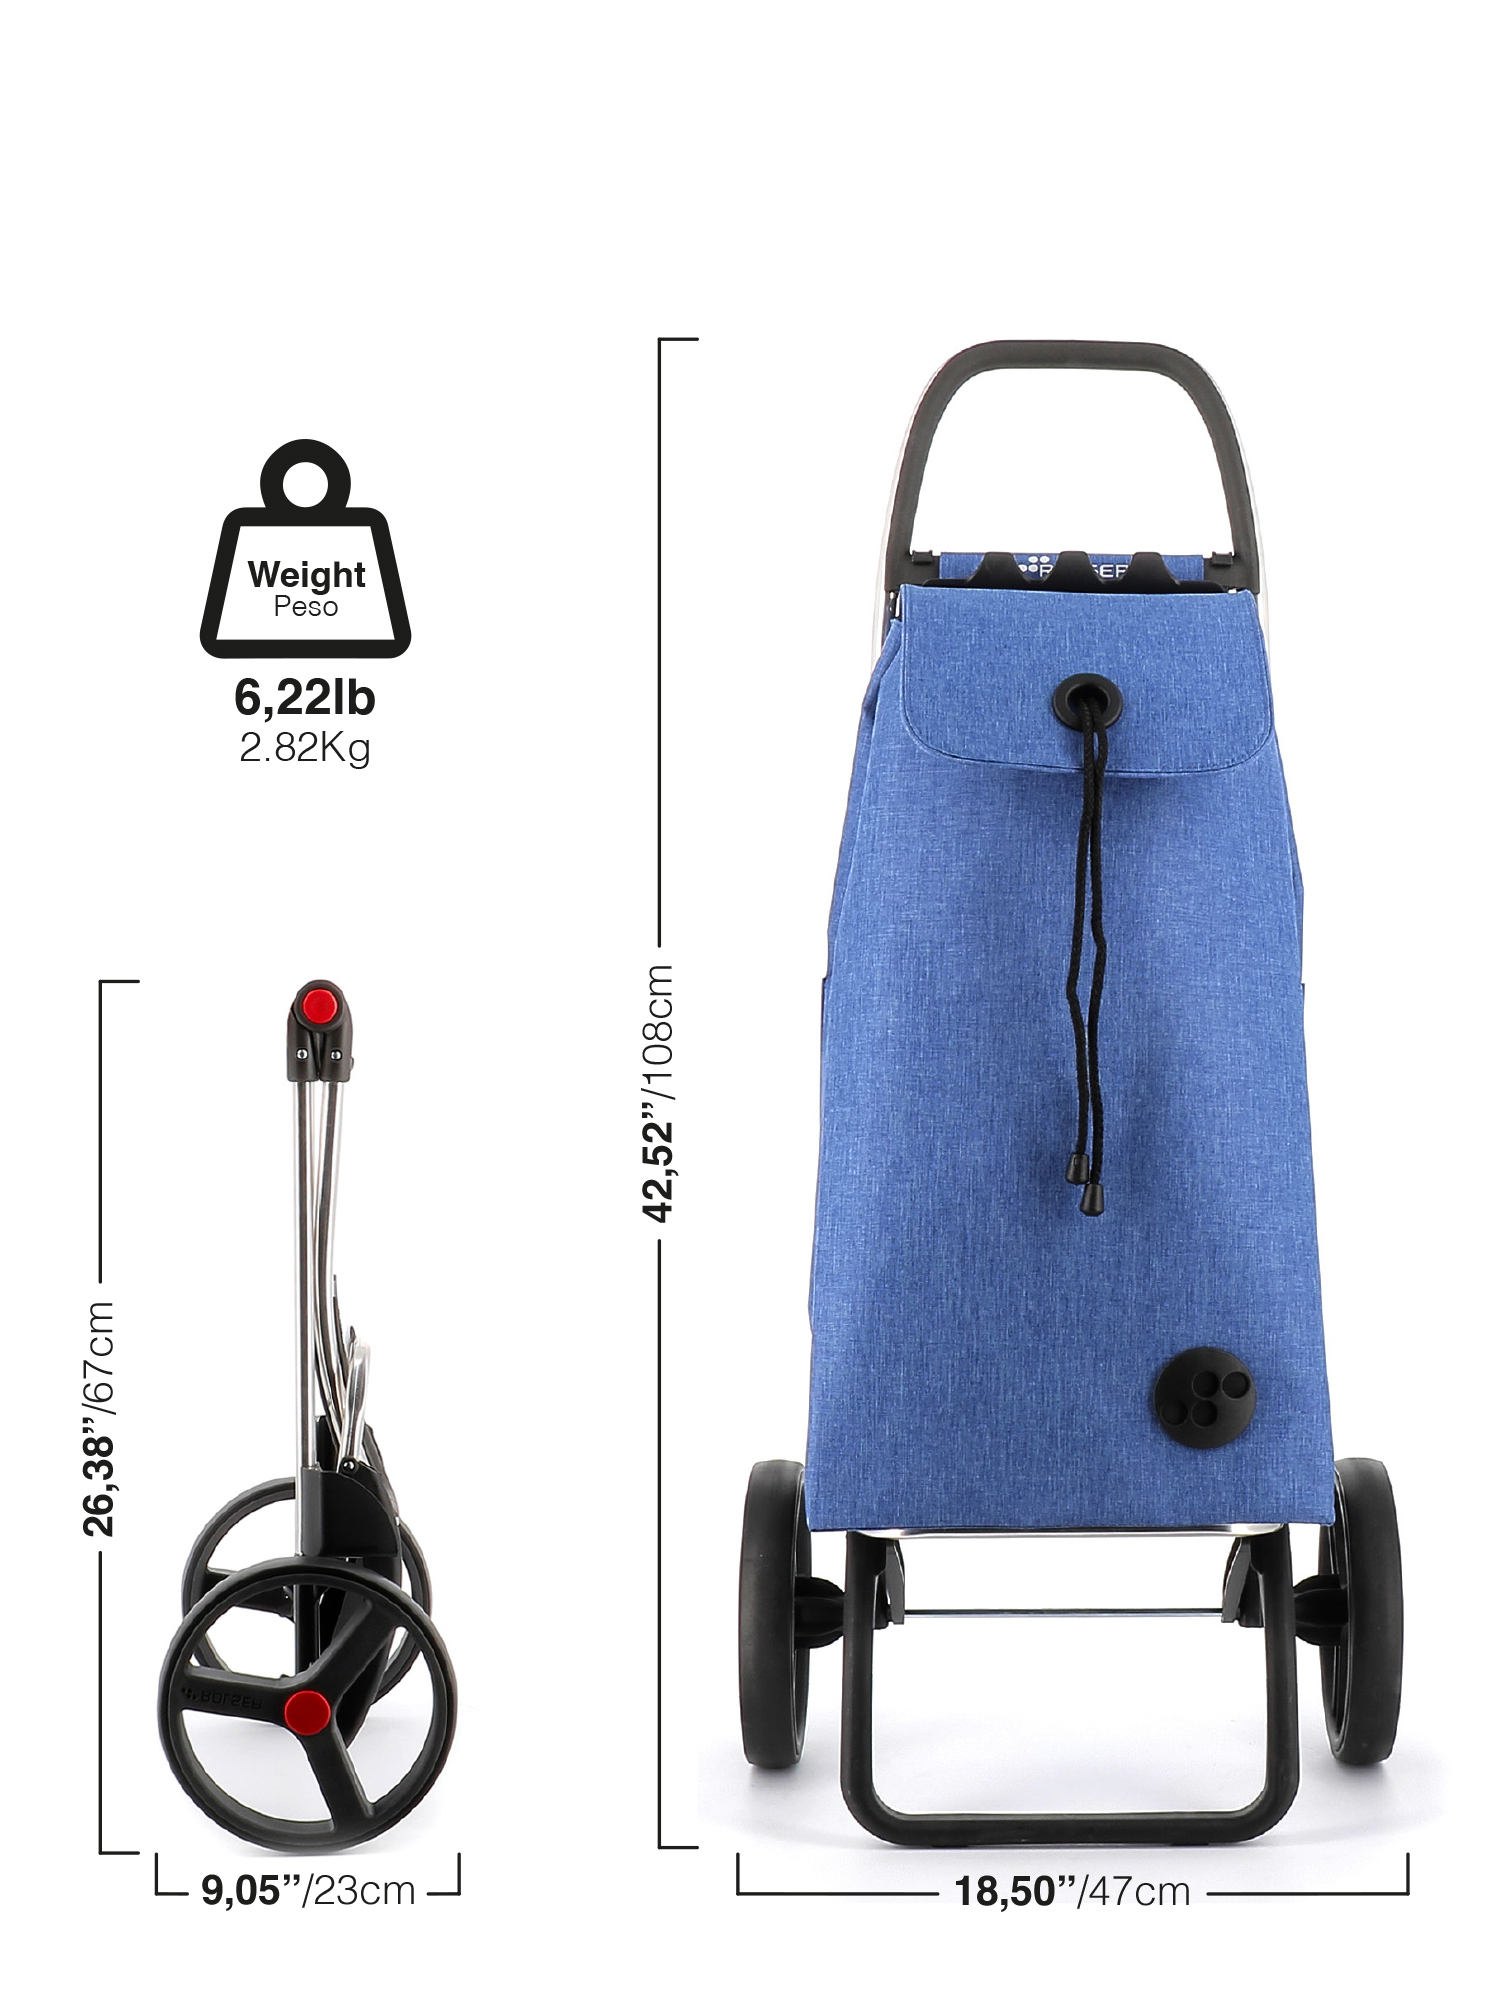 ROLSER I-Max Tweed - Carrito de compras plegable de 2 ruedas, color azul  marino